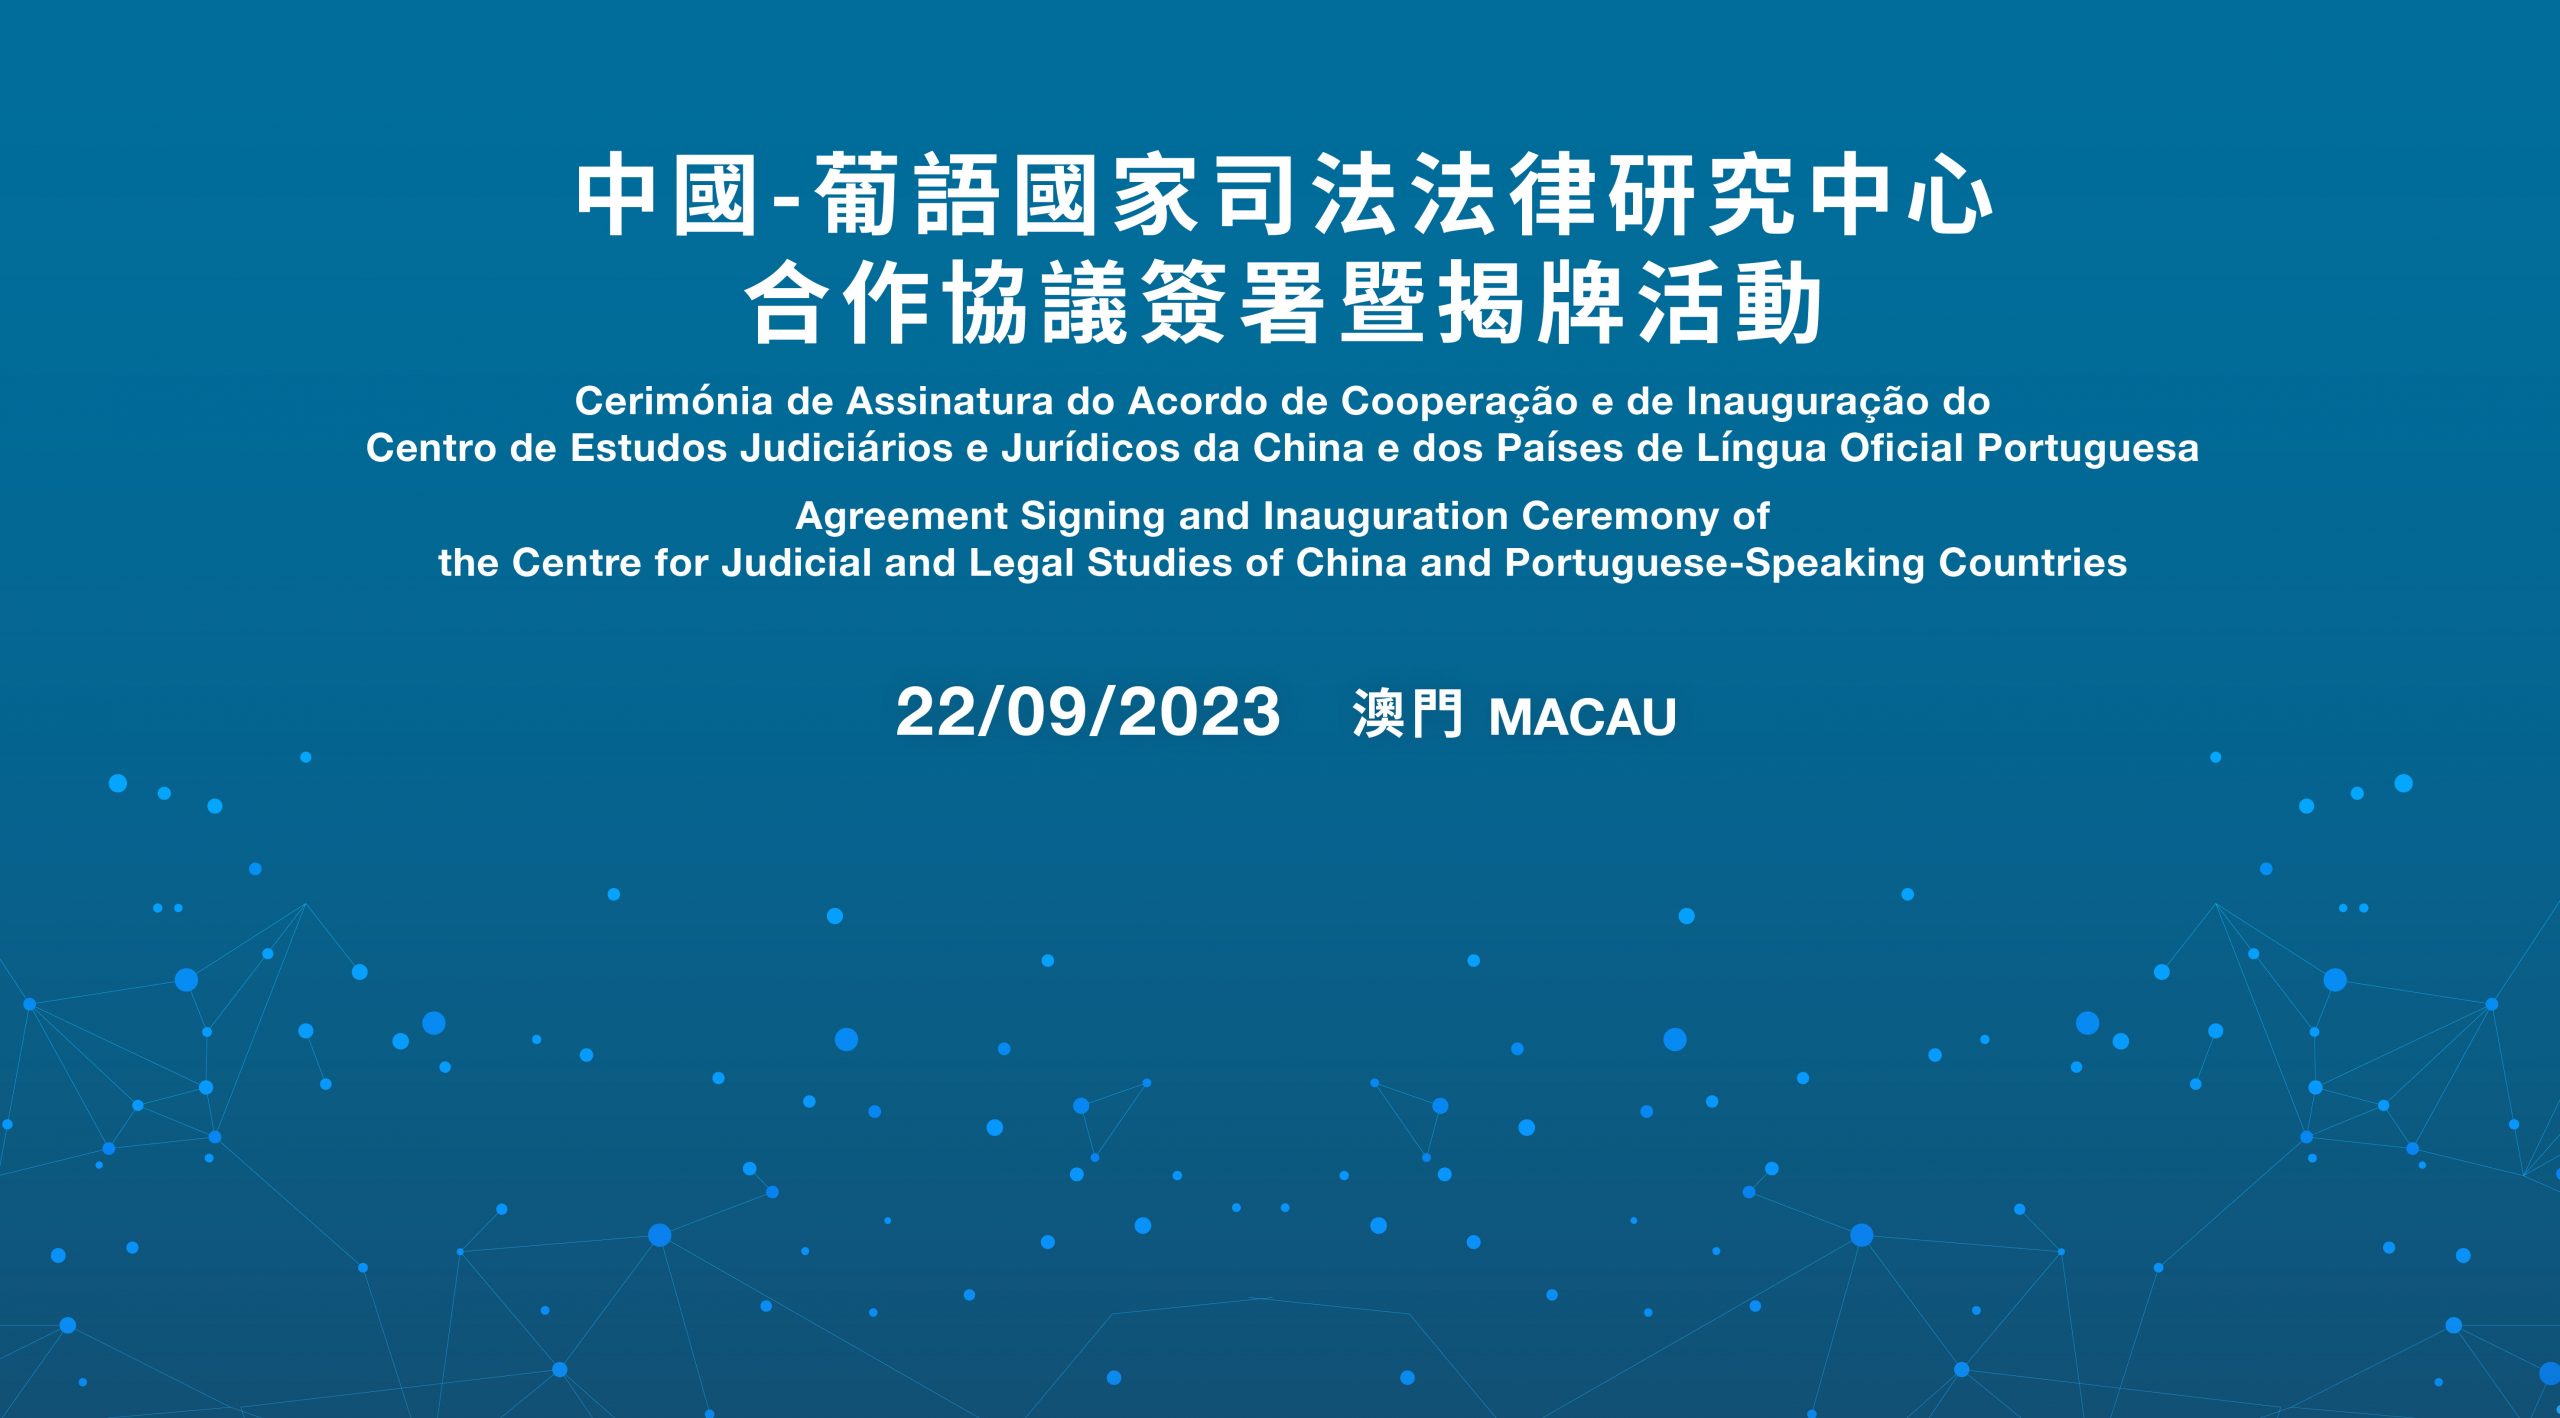 Macao Youth / Student Municipal and Social Affairs Quiz Competition  (Application: Sep 8-30) – Universidade de Macau